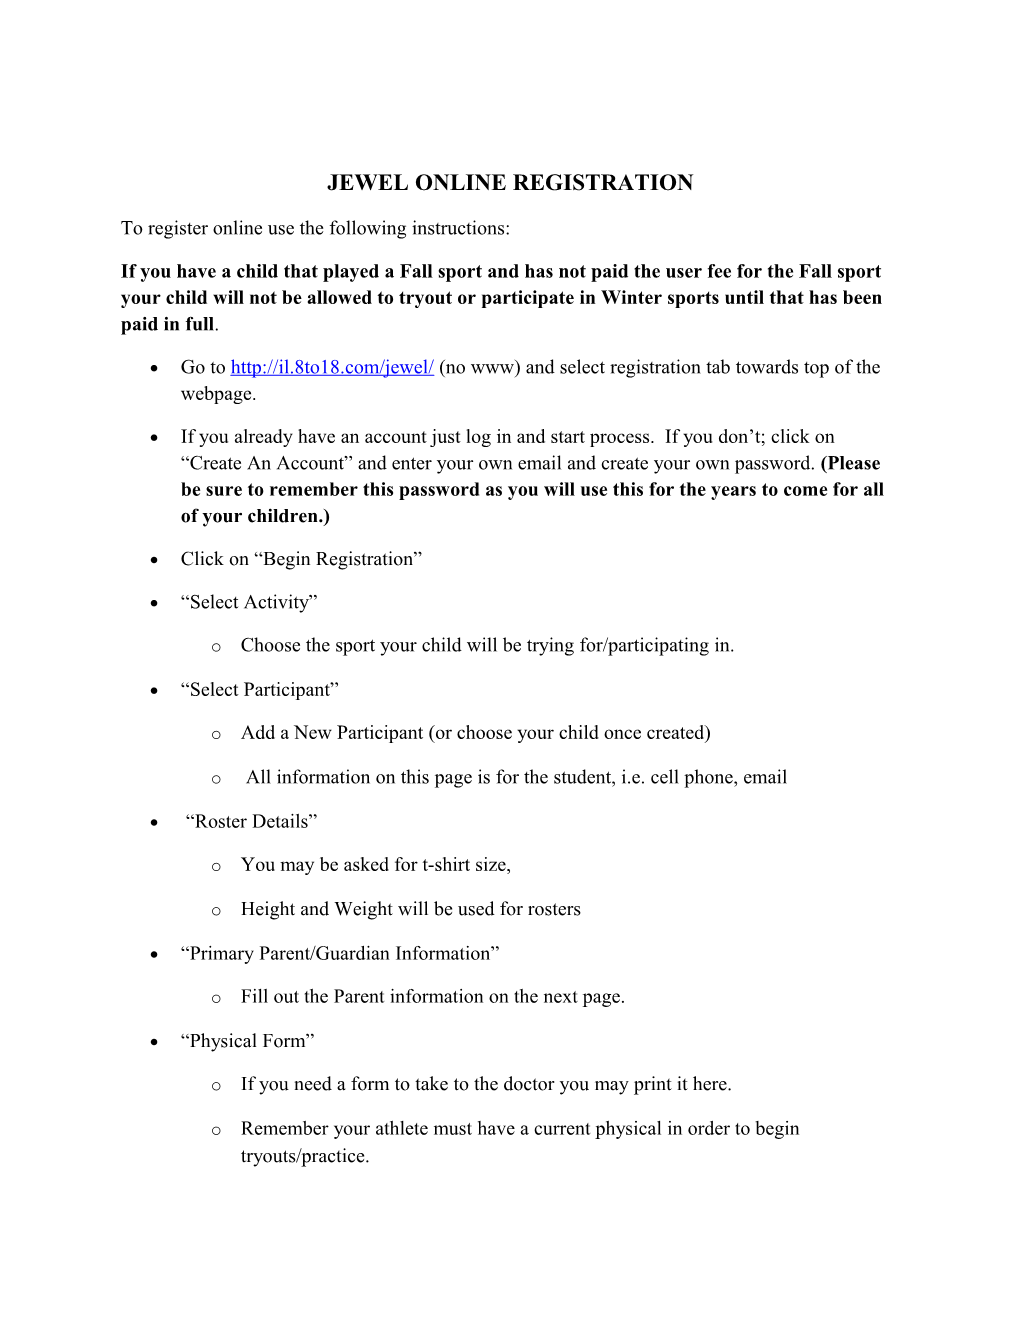 Jewel Online Registration